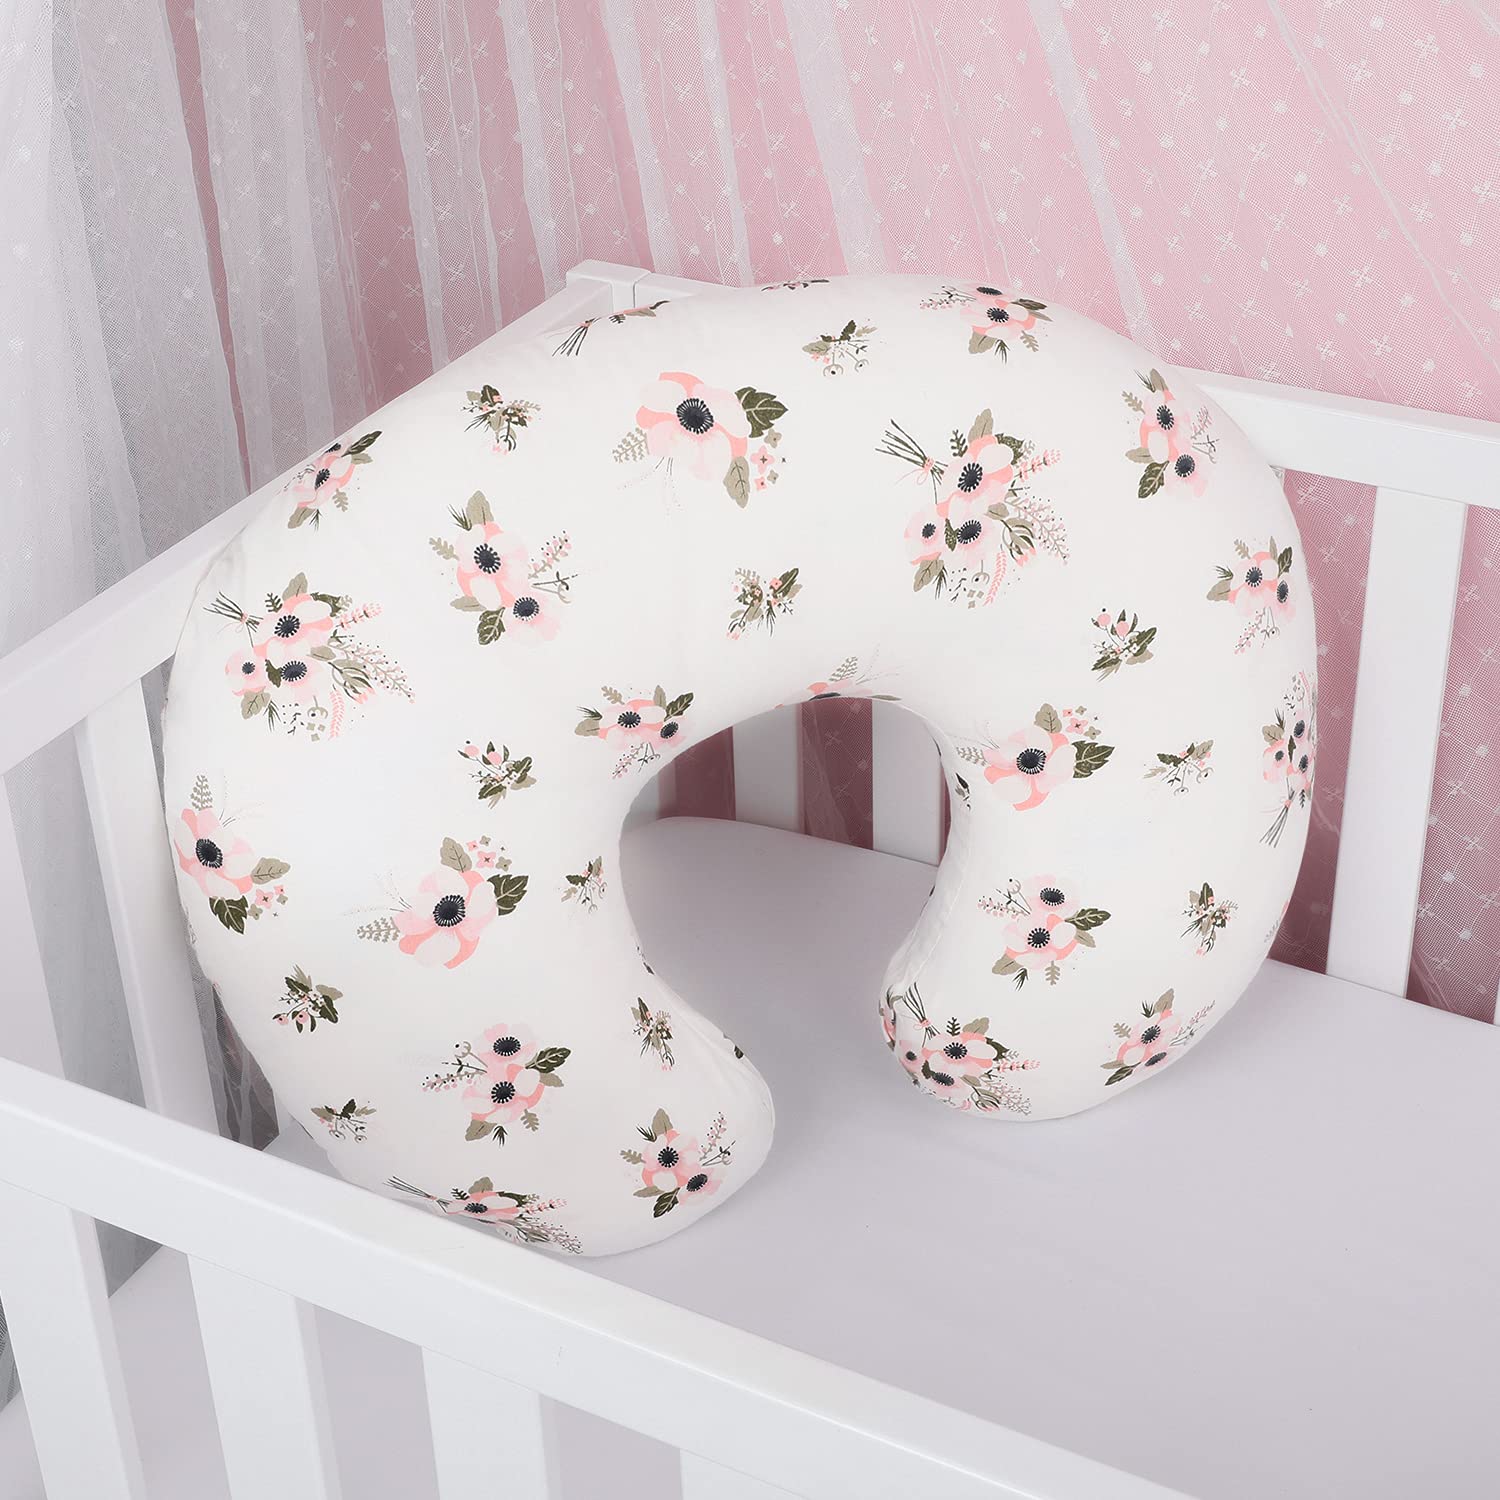 C Shaped Nursing Pillow Soft Fabric Fits Snug on Infant Nursing